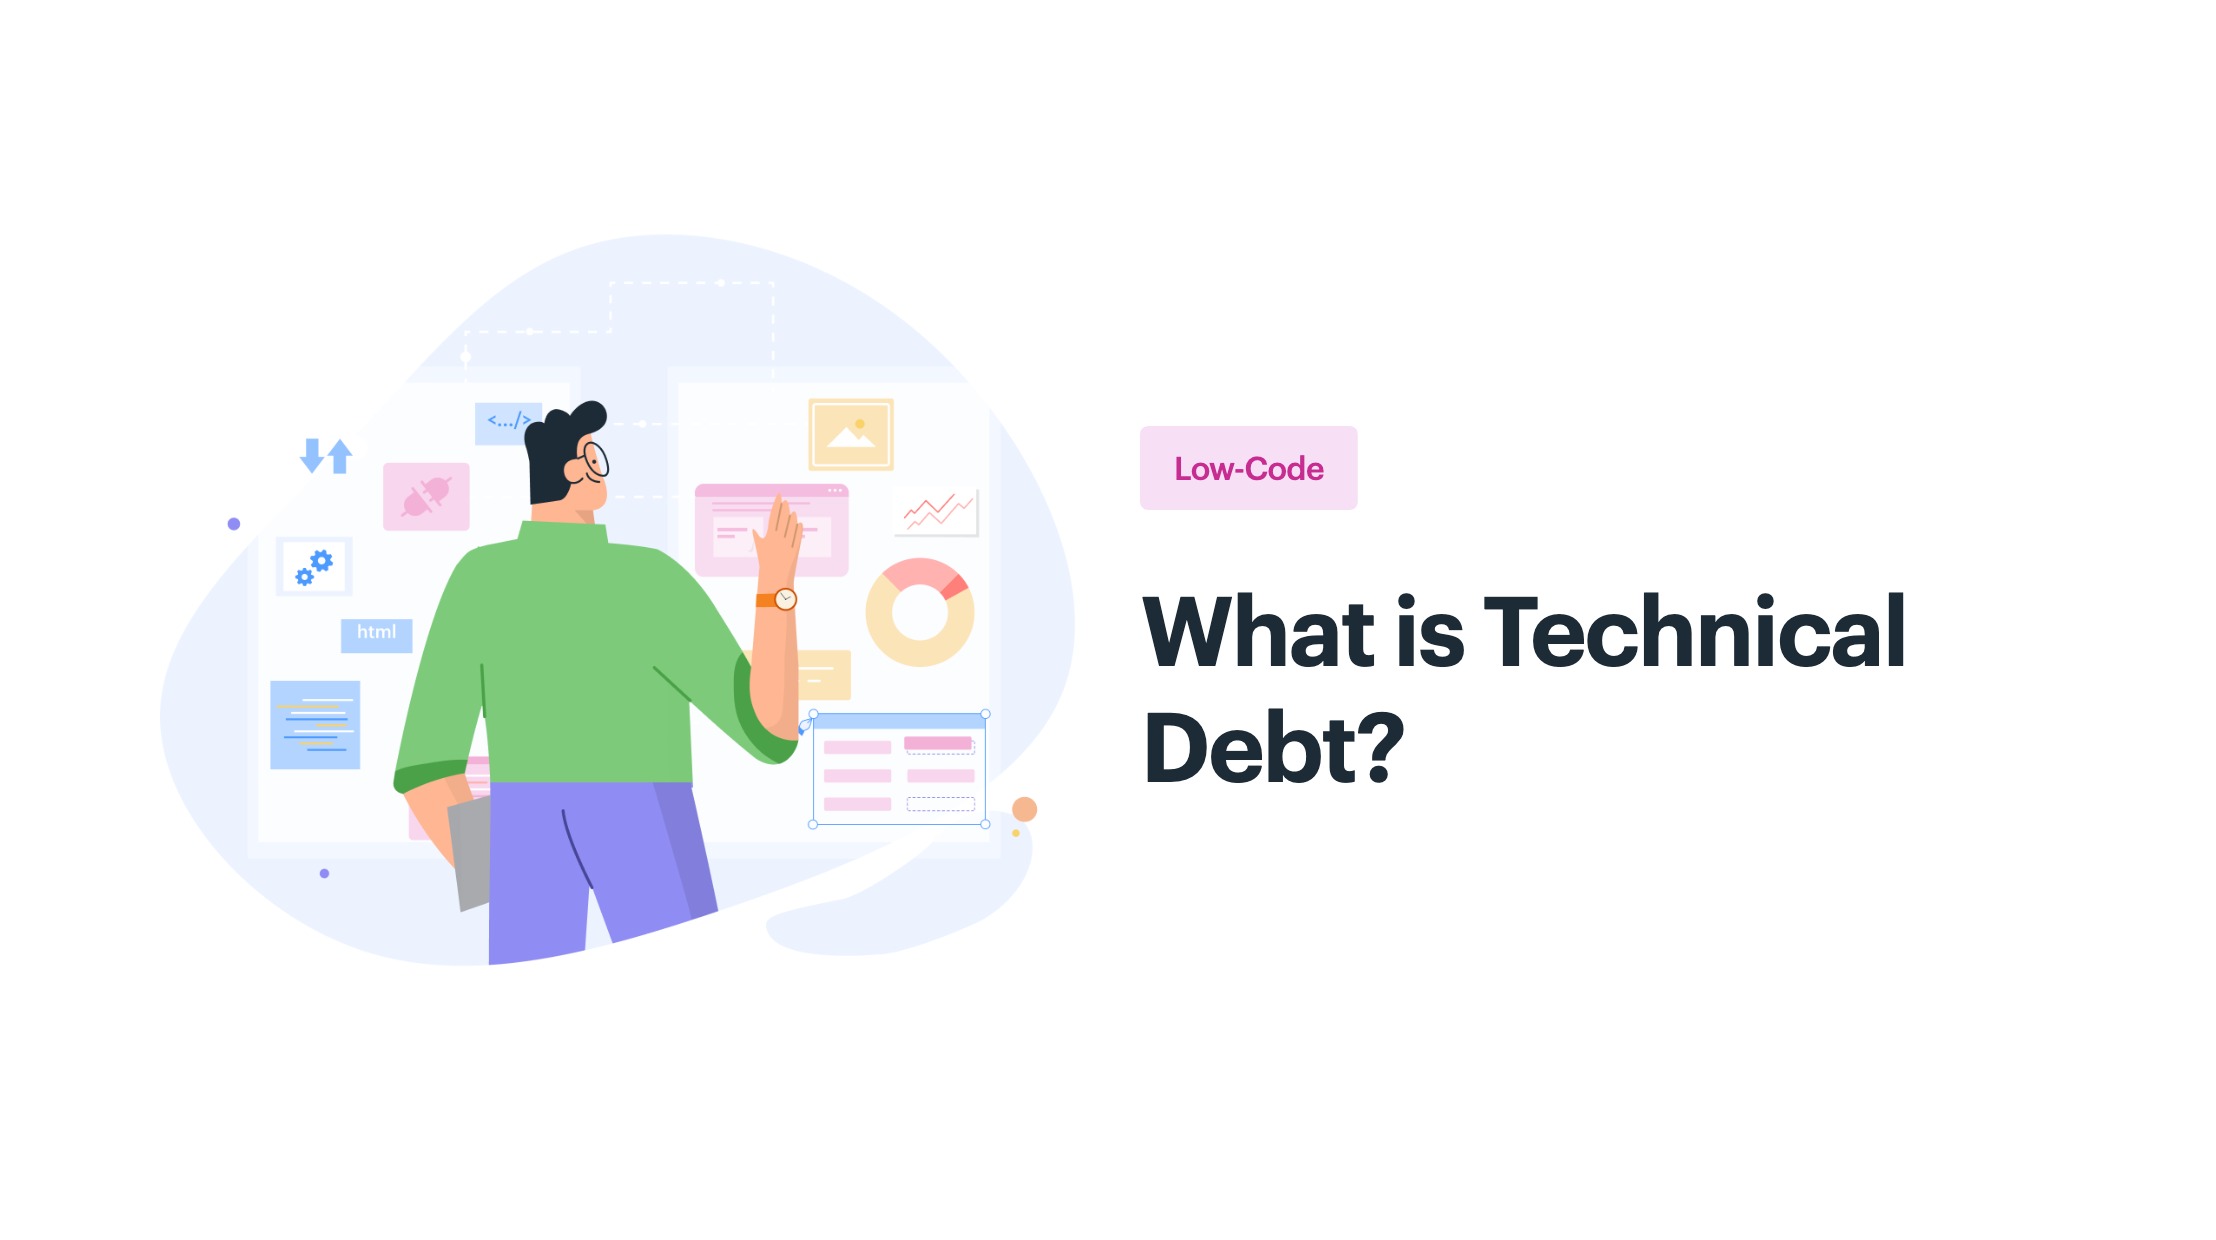 technical debt presentation